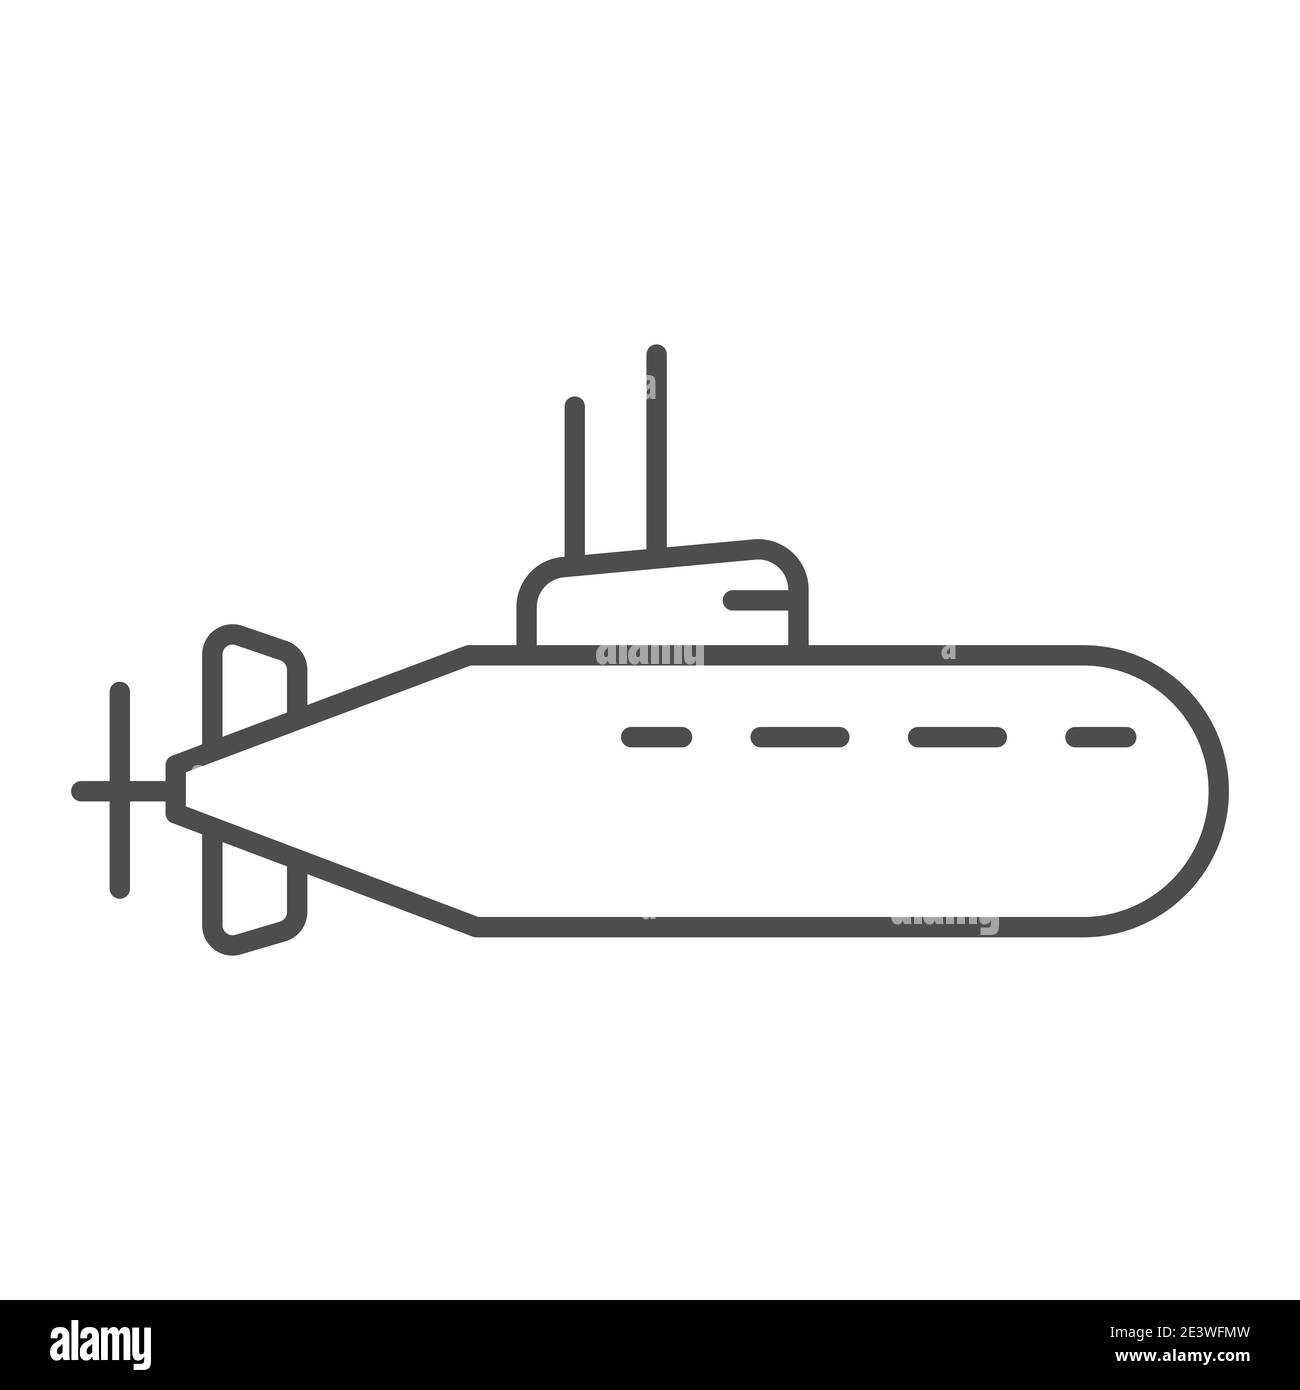 Submarino icono de línea fina, concepto náutico, submarino signo de barco sobre fondo blanco, submarino con periscopio icono en estilo contorno para móviles Ilustración del Vector